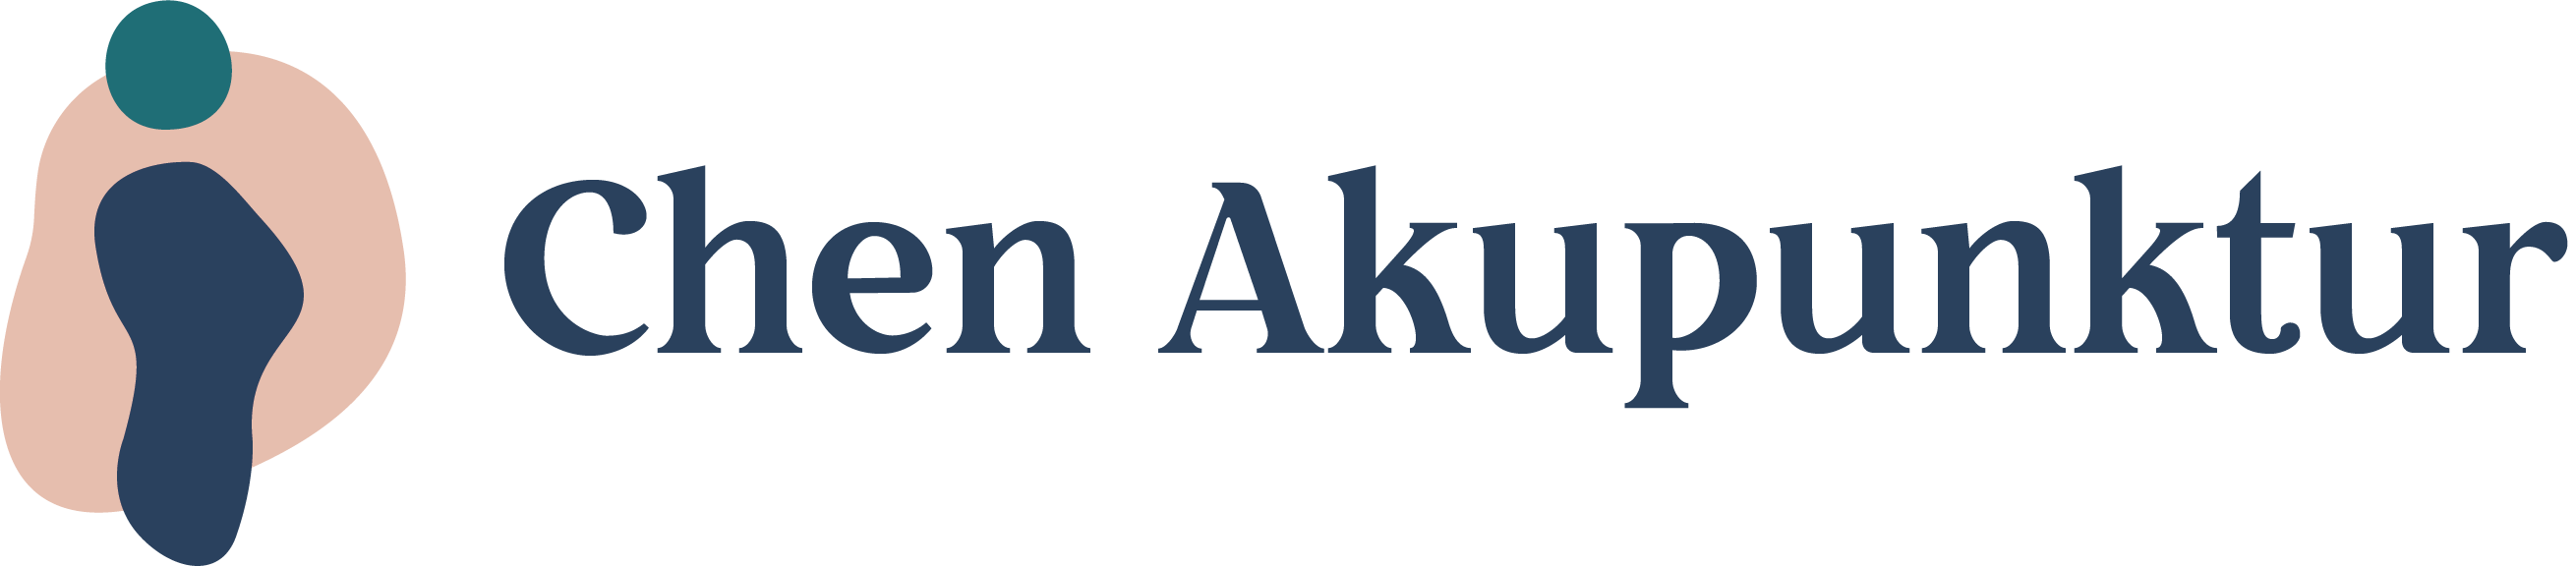 logo_chenakupunktur